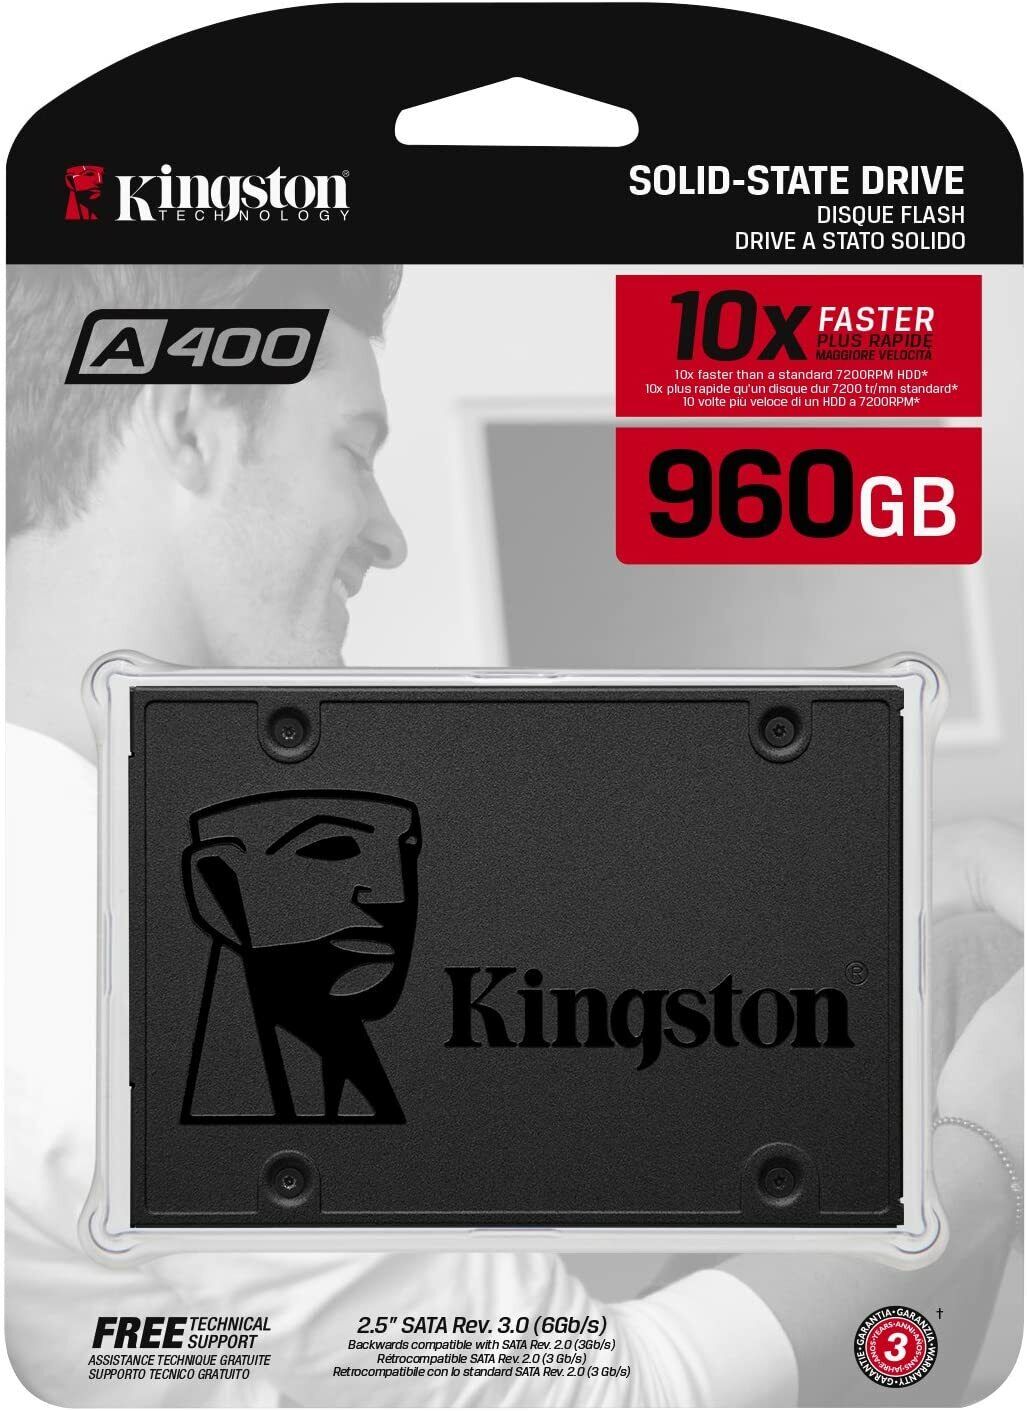 Kingston A400 SSD 960GB SATA III 2.5” Internal Solid State Drive New Sealed